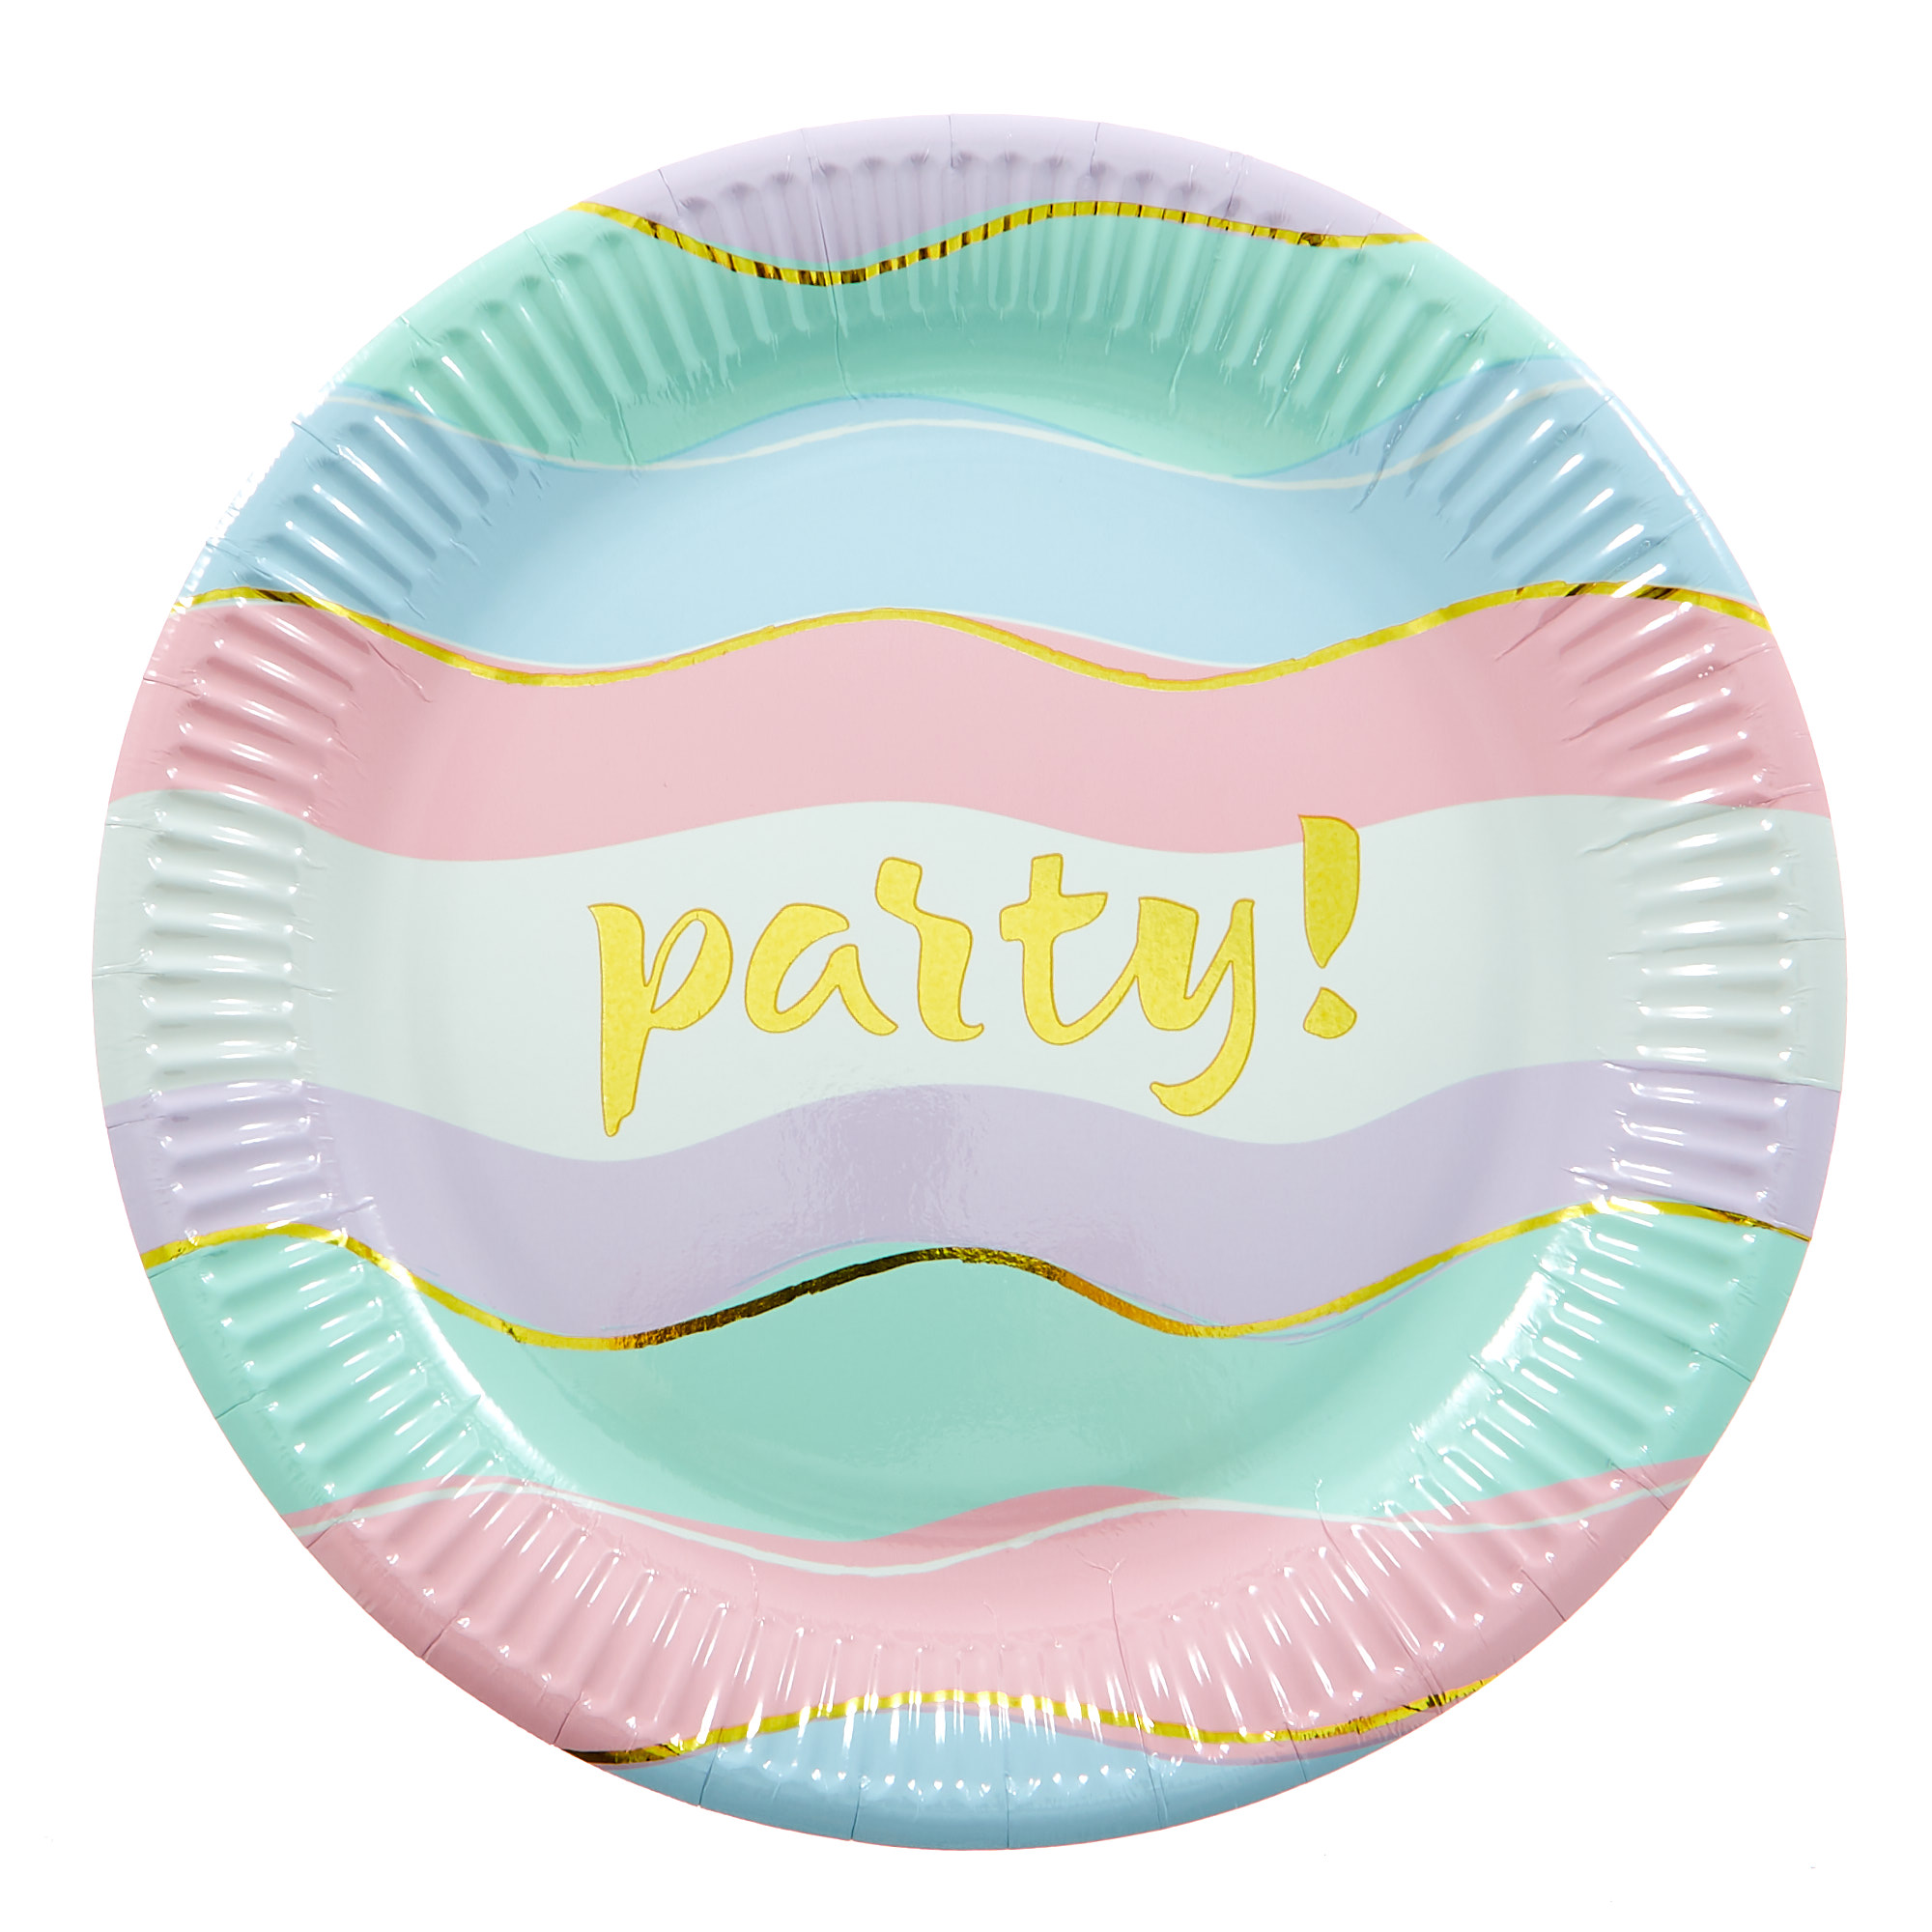 Pastel Party Tableware & Decorations Bundle - 16 Guests